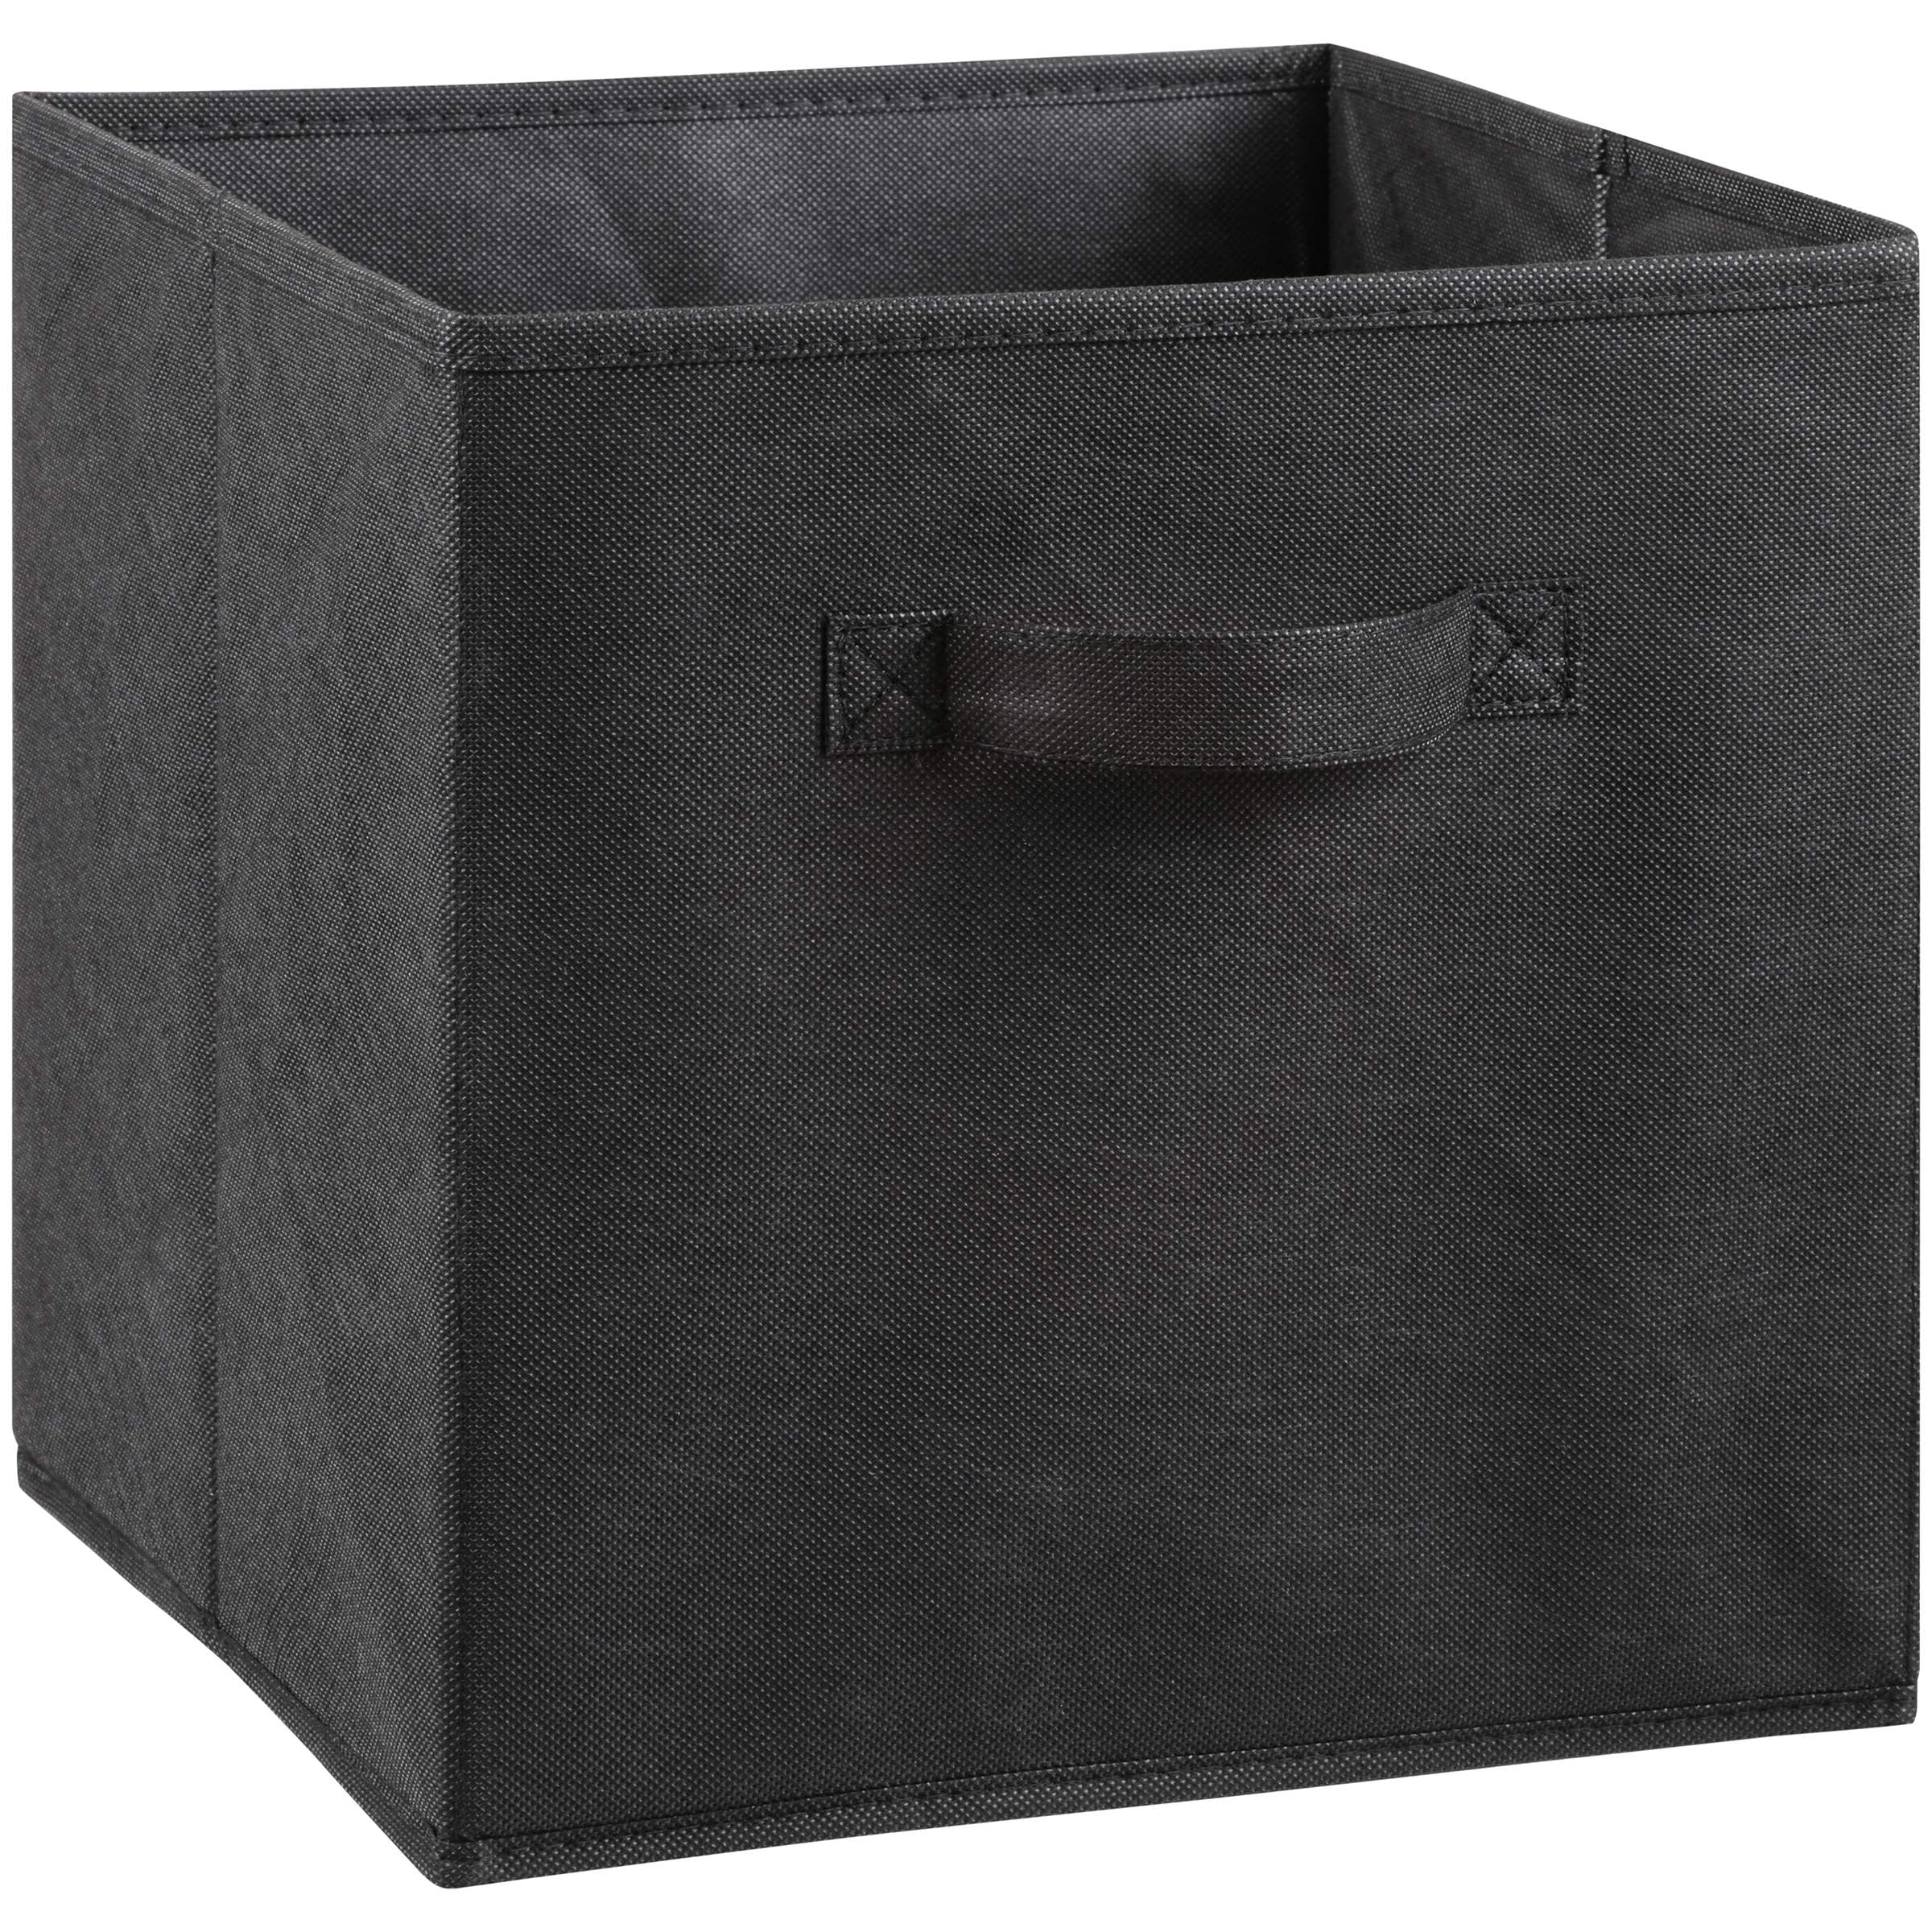 11x11 cube storage basket